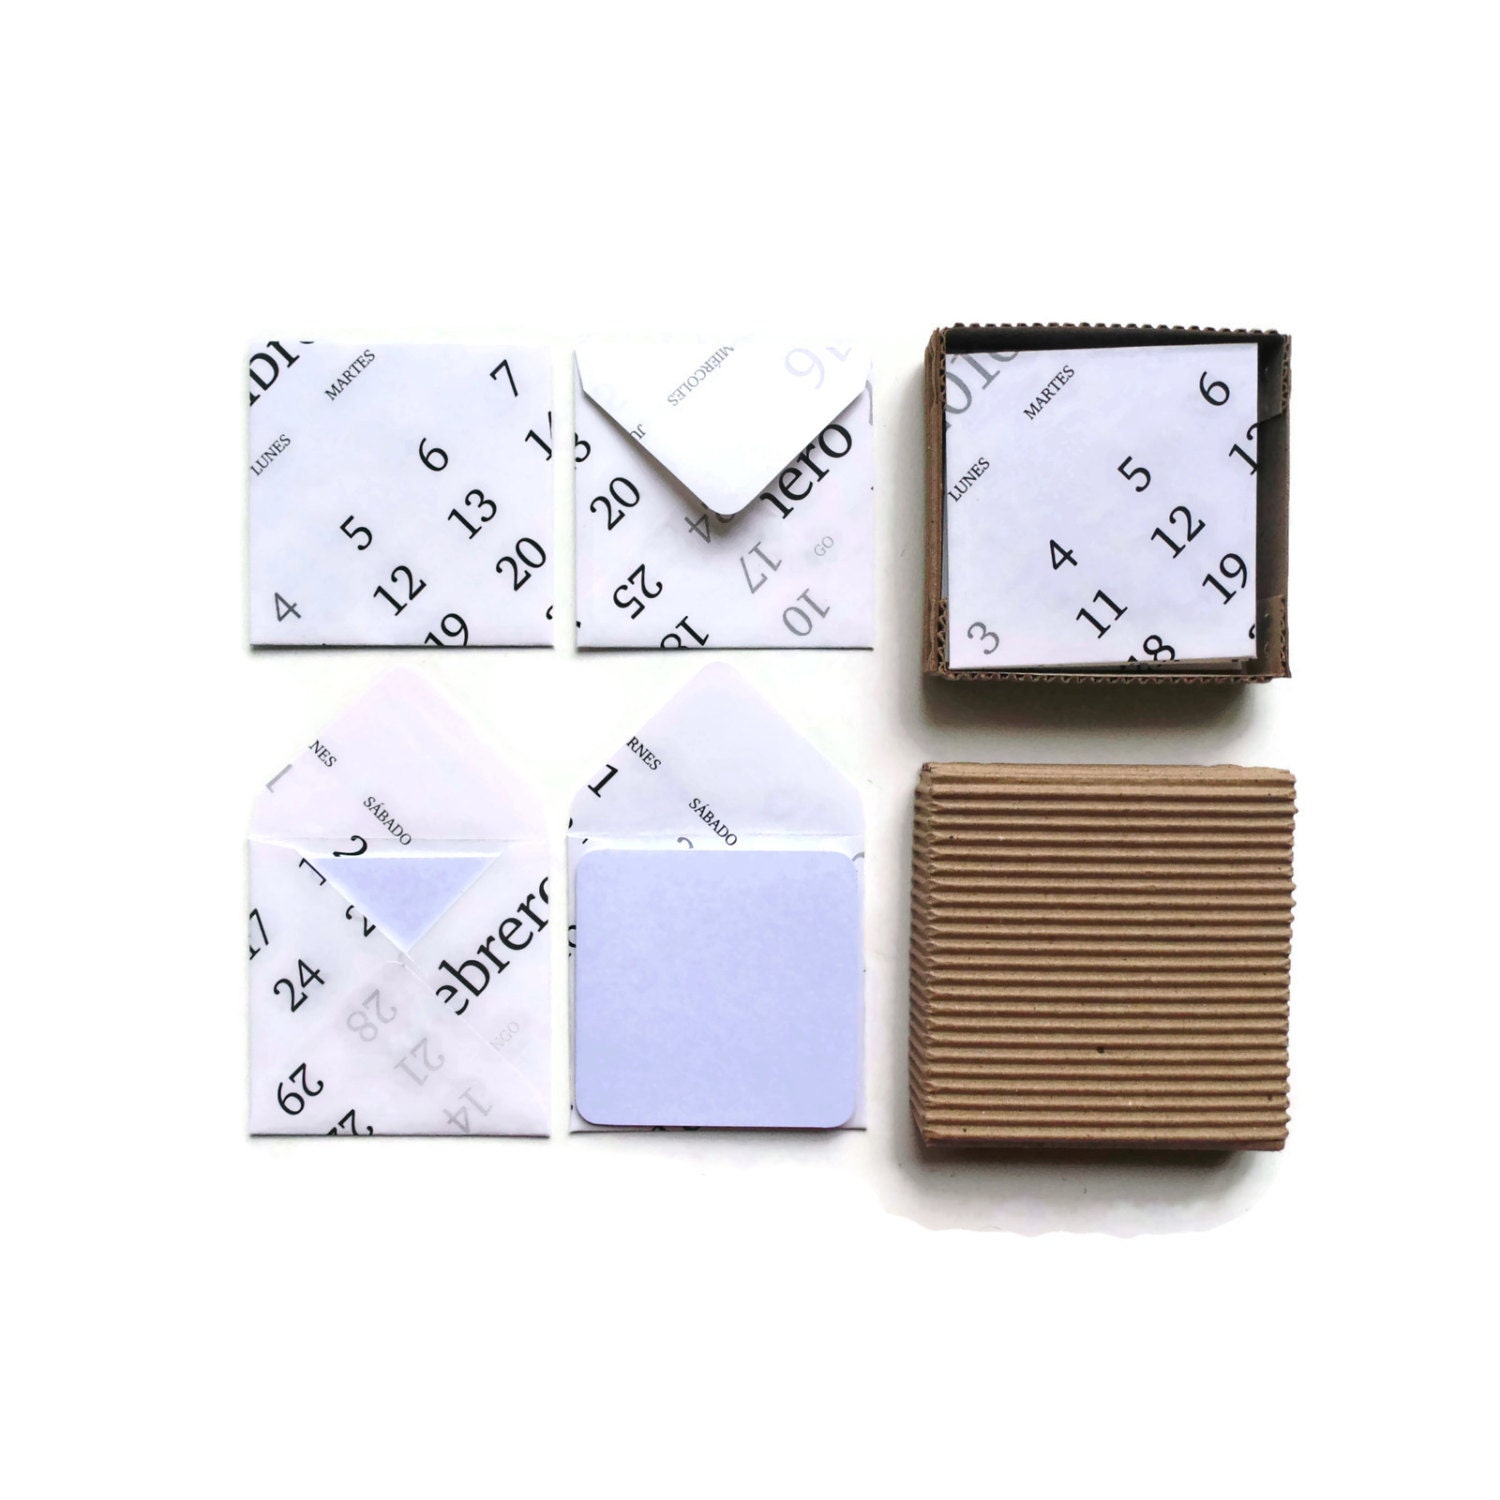 Almanac Envelopes Mini Stationery Set Cute Blank Note Cards